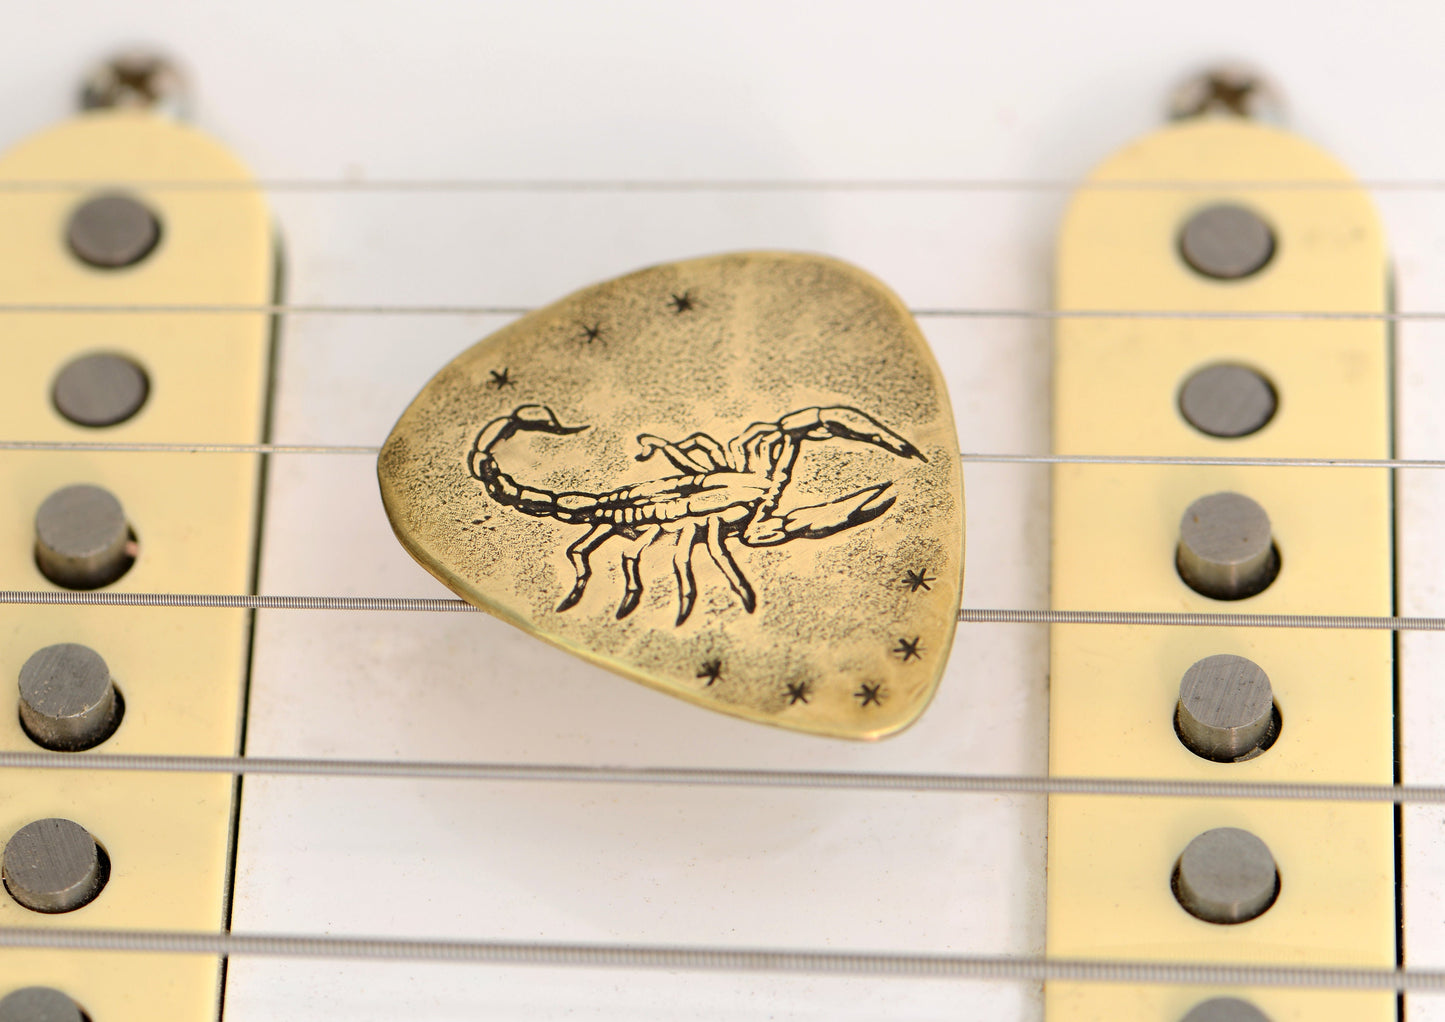 Brass Scorpion Artisan Guitar Pick Limited Edition with Handmade Custom Scorpion Imprint Design - NicisPicks Original - collectible